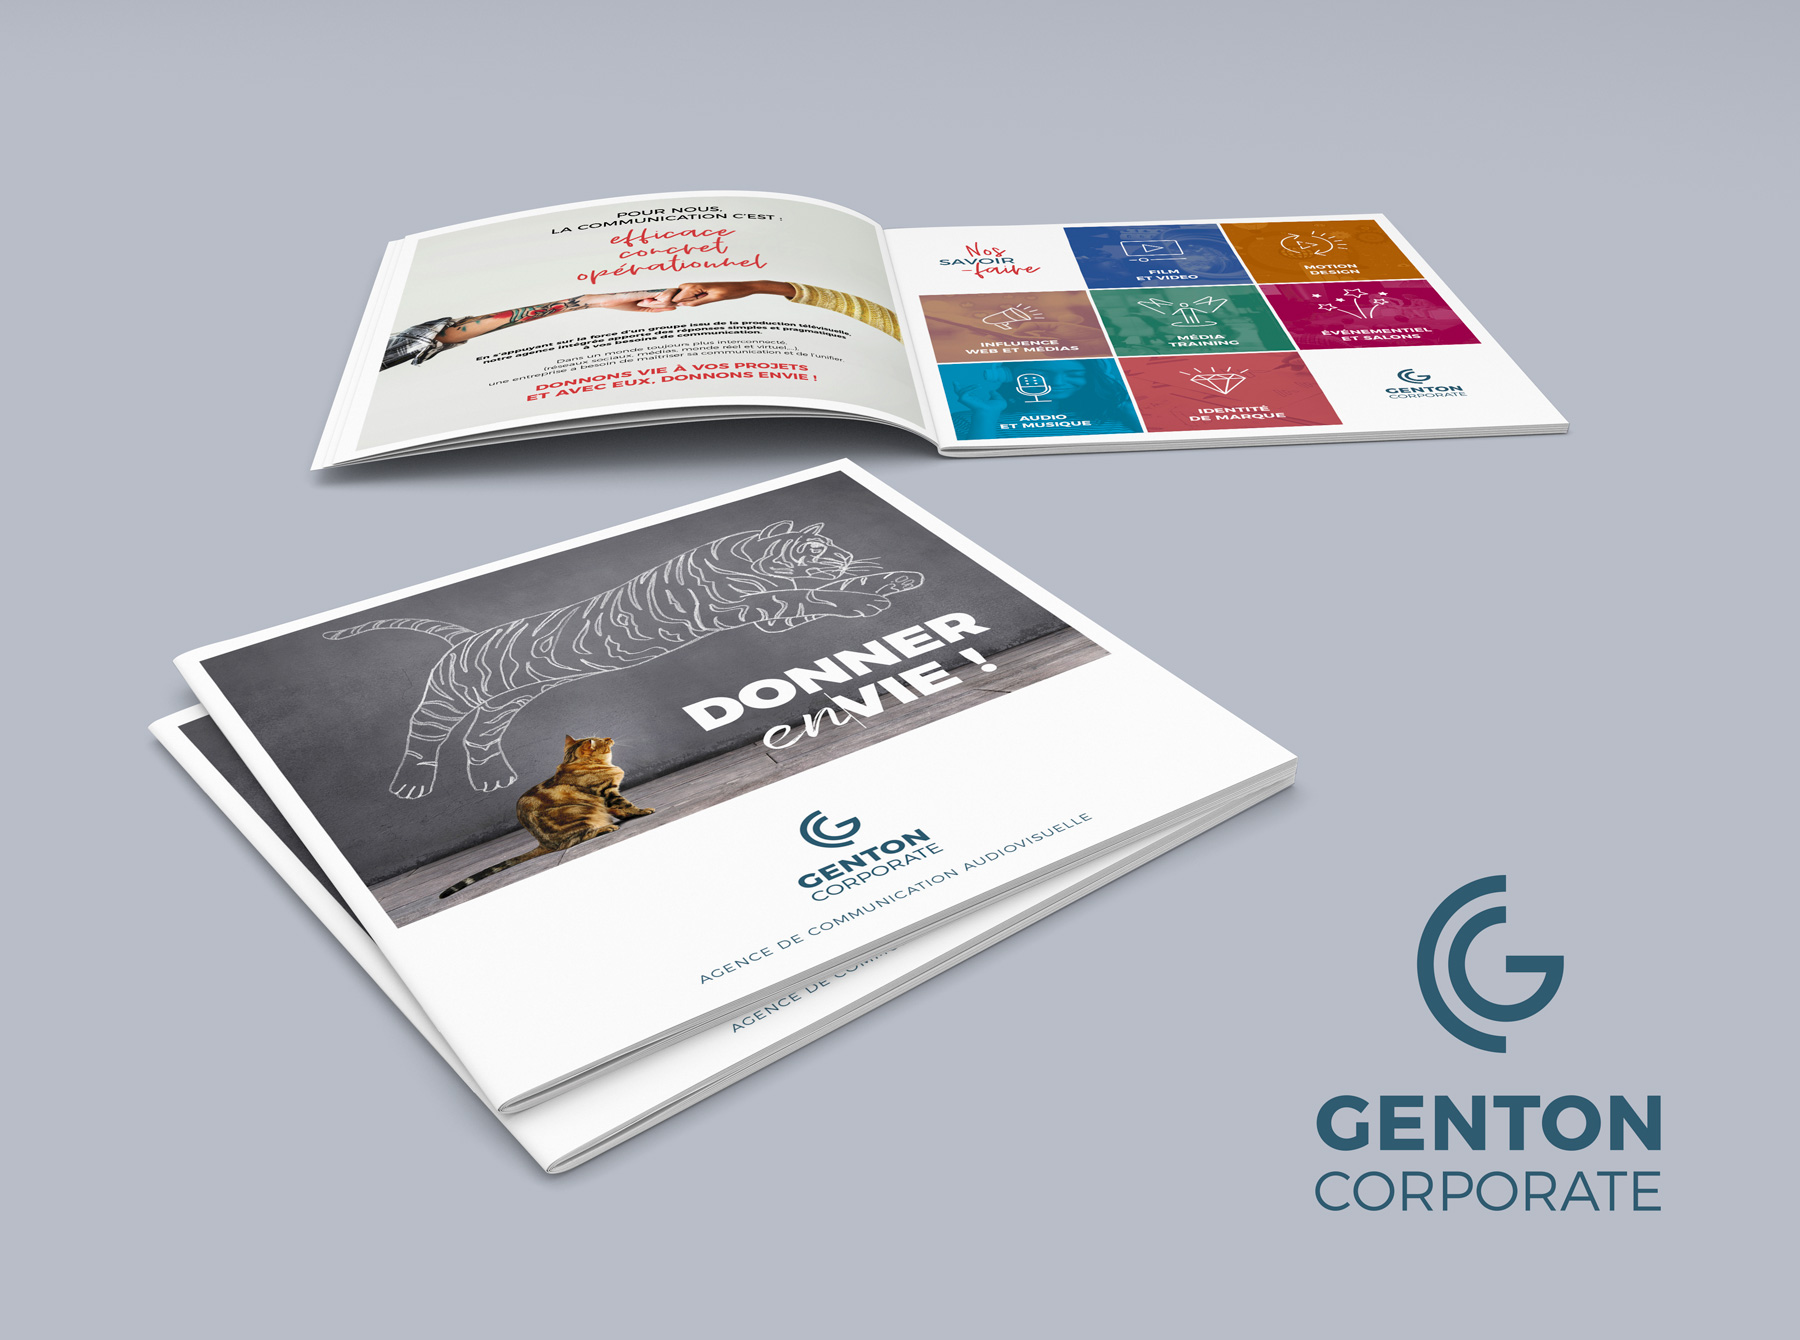 Genton Corporate brochure-simulation